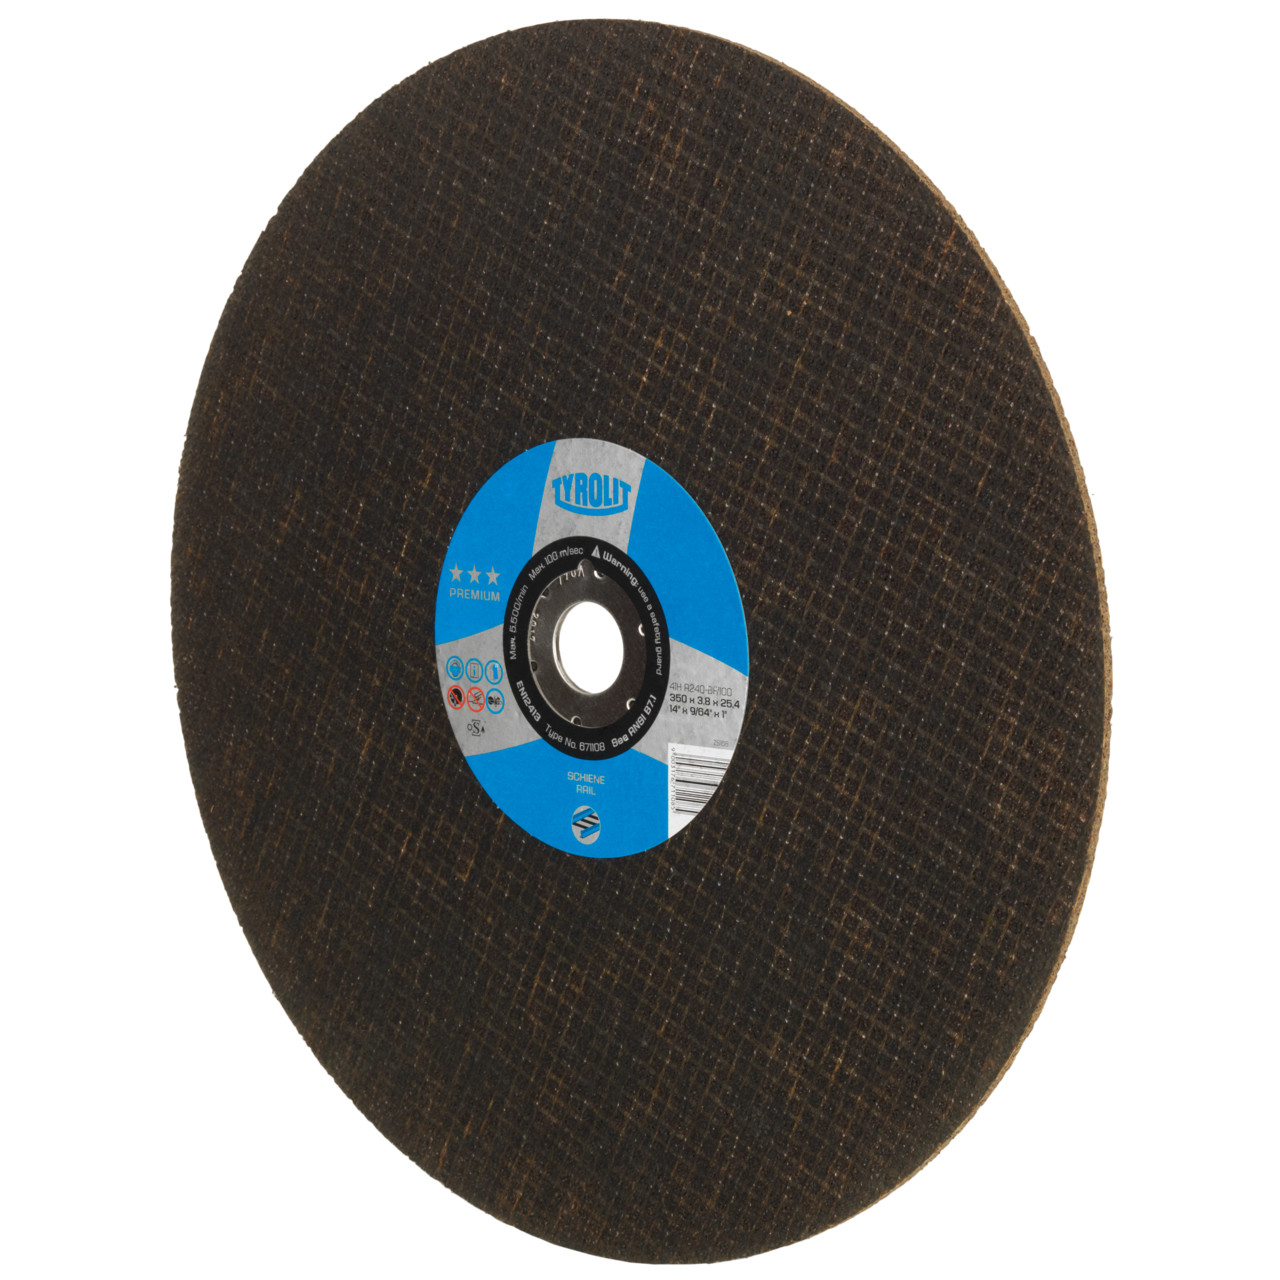 Tyrolit Cutting discs DxDxH 350x3.8x22.2 For rails, shape: 41 - straight version, Art. 671093